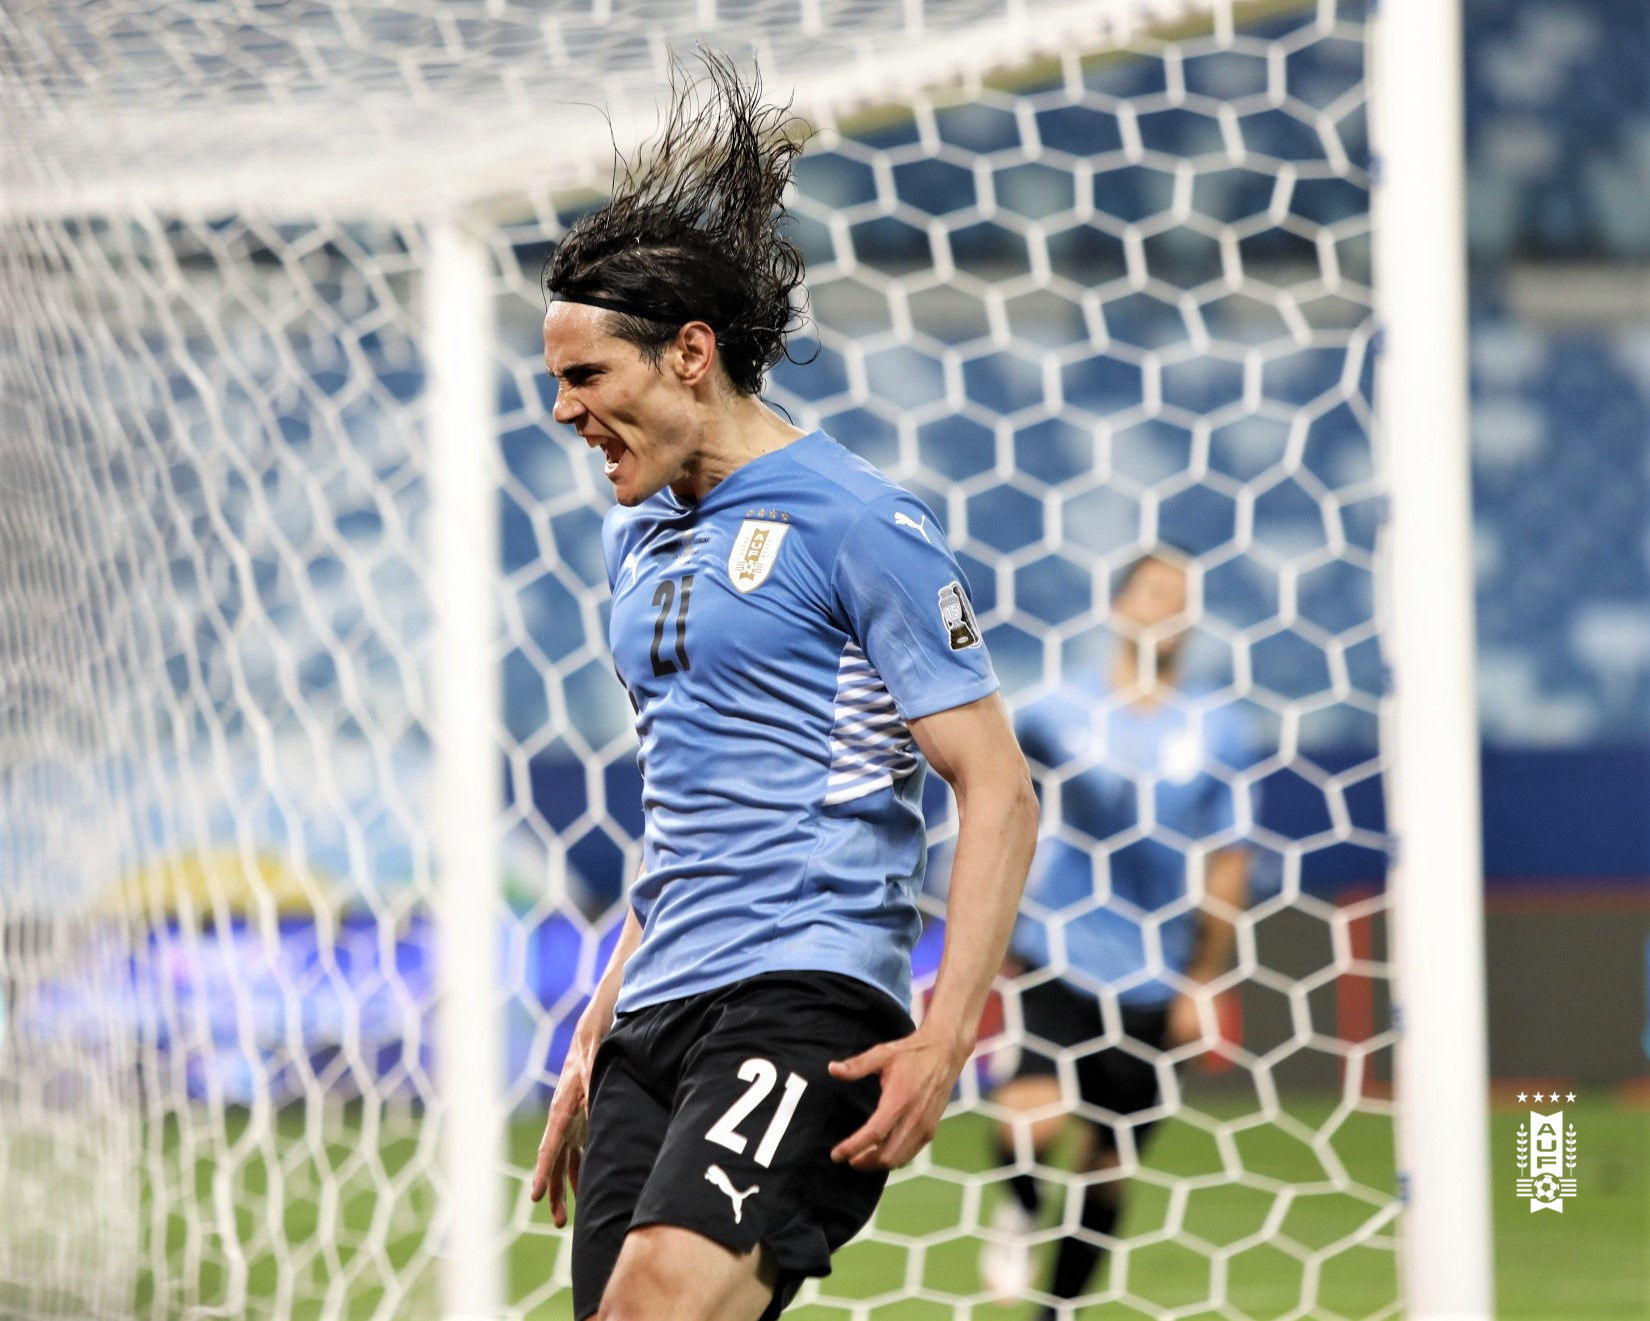 Copa America: Thanks to Cavani, Uruguay makes way into quarters